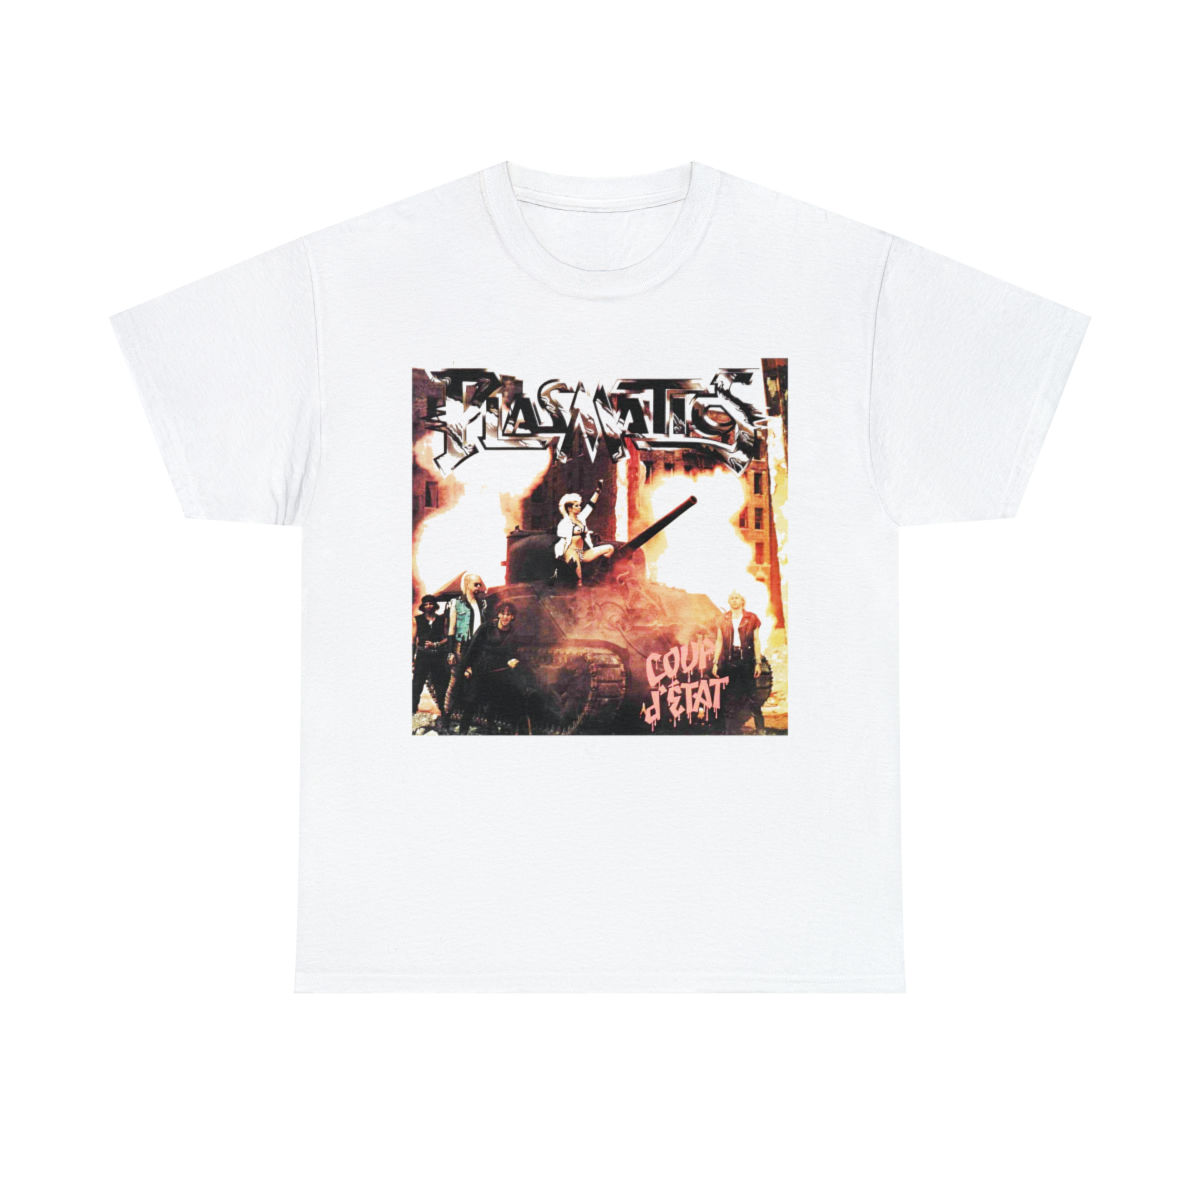 Plasmatics Coup D'etat Album Cover Shirt - ReproTees - The Home of